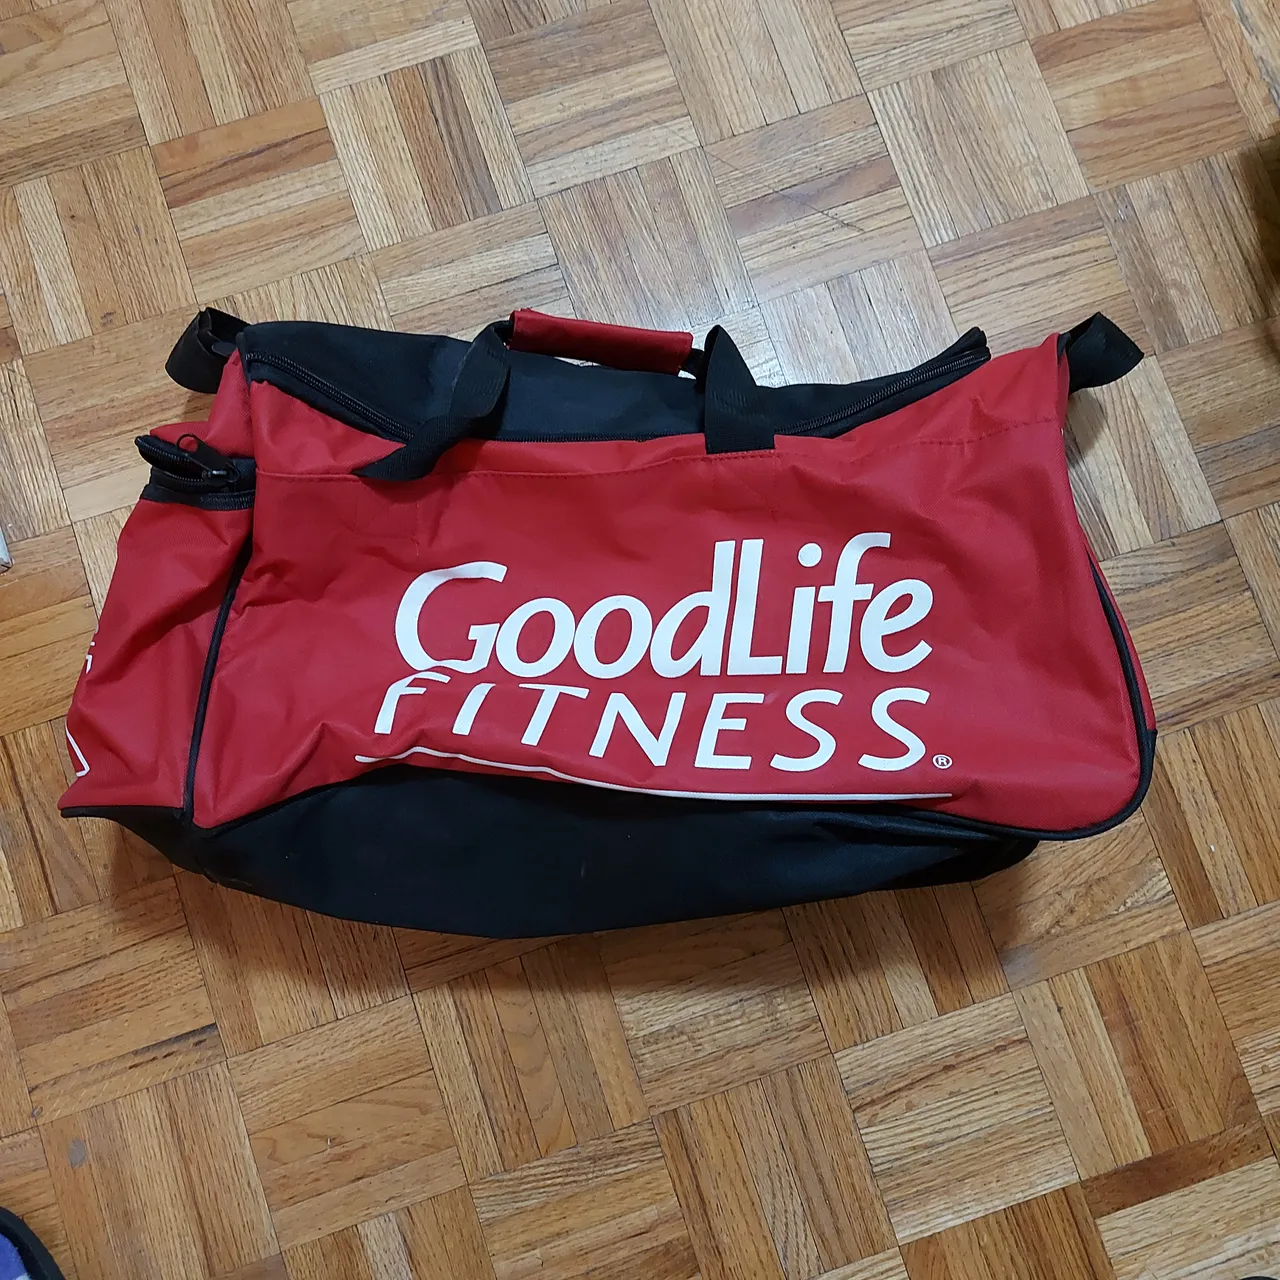 Goodlife fitness duffle bag photo 3